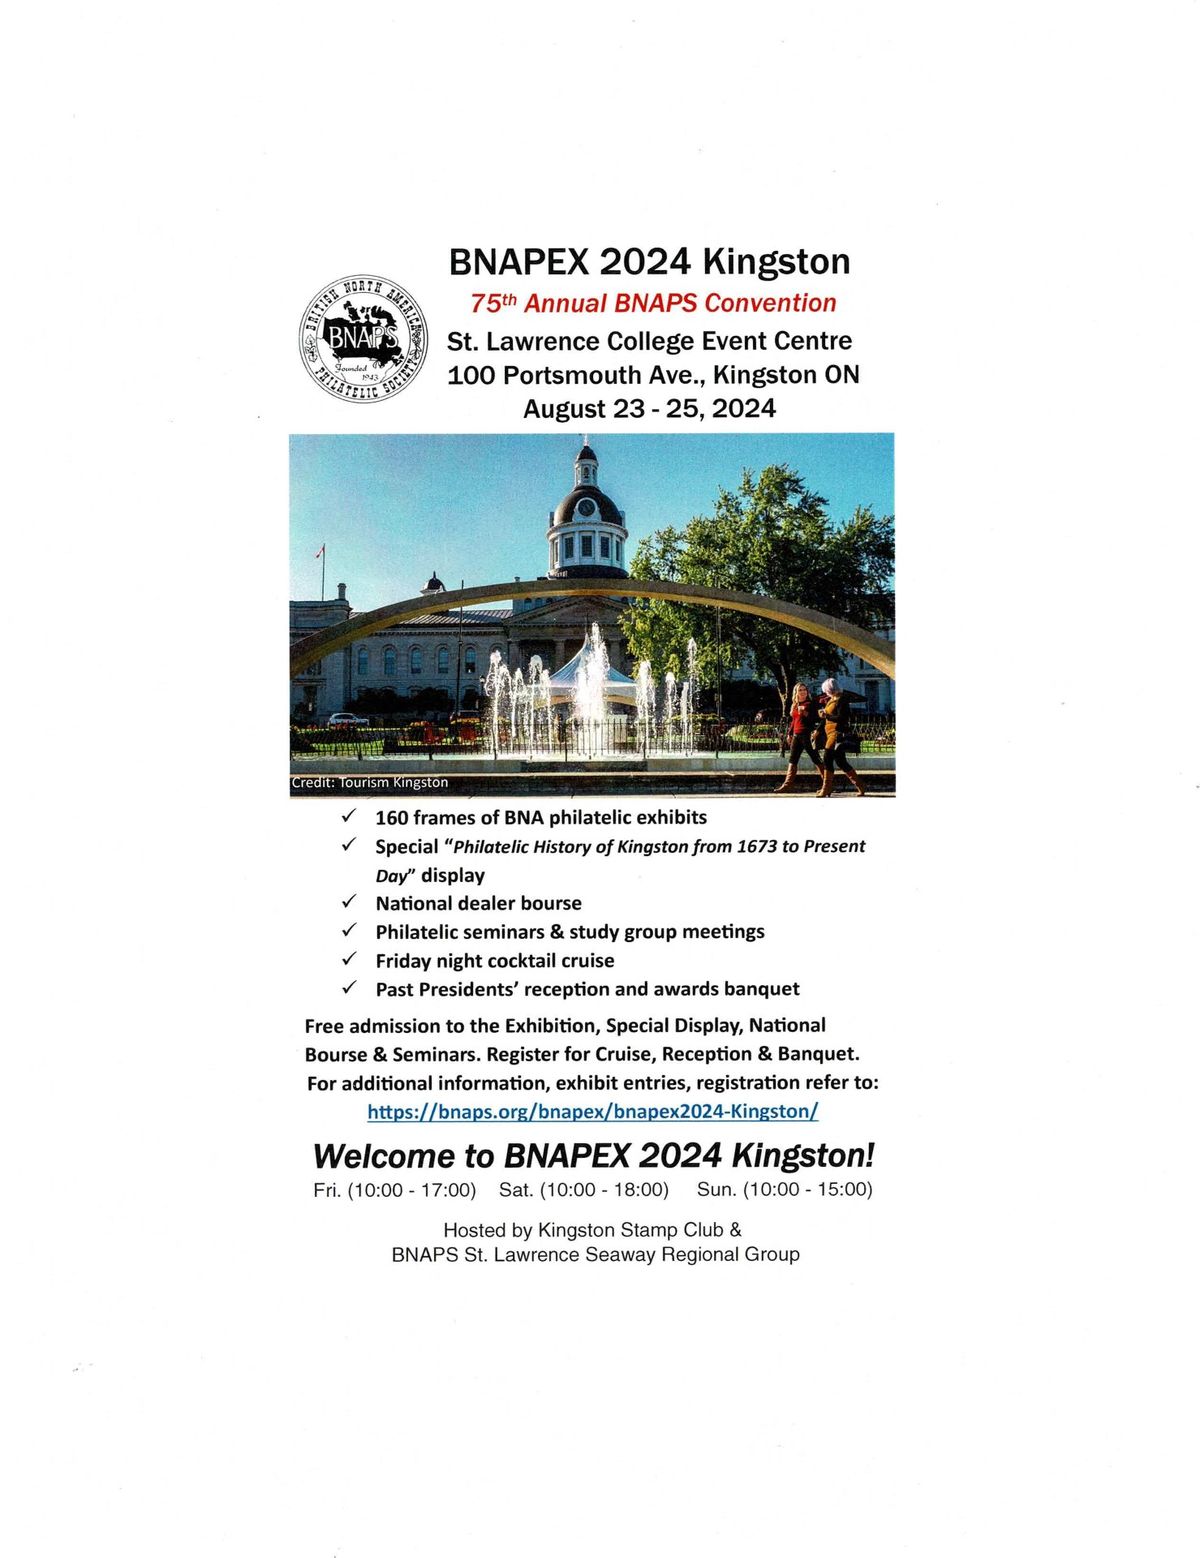 BNAPEX 2024 - KINGSTON